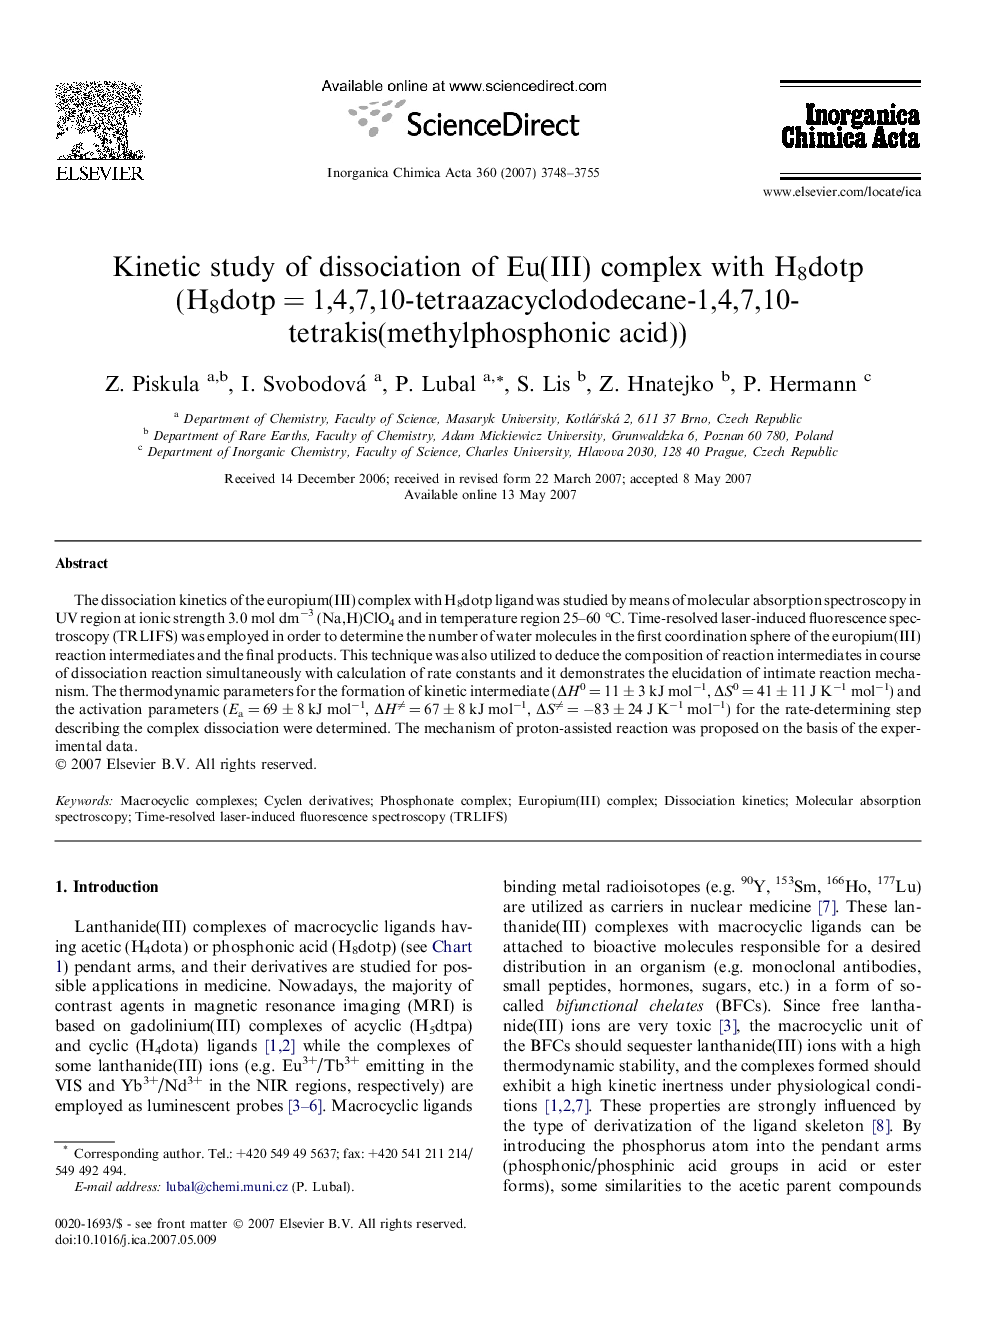 Kinetic study of dissociation of Eu(III) complex with H8dotp (H8dotp = 1,4,7,10-tetraazacyclododecane-1,4,7,10-tetrakis(methylphosphonic acid))